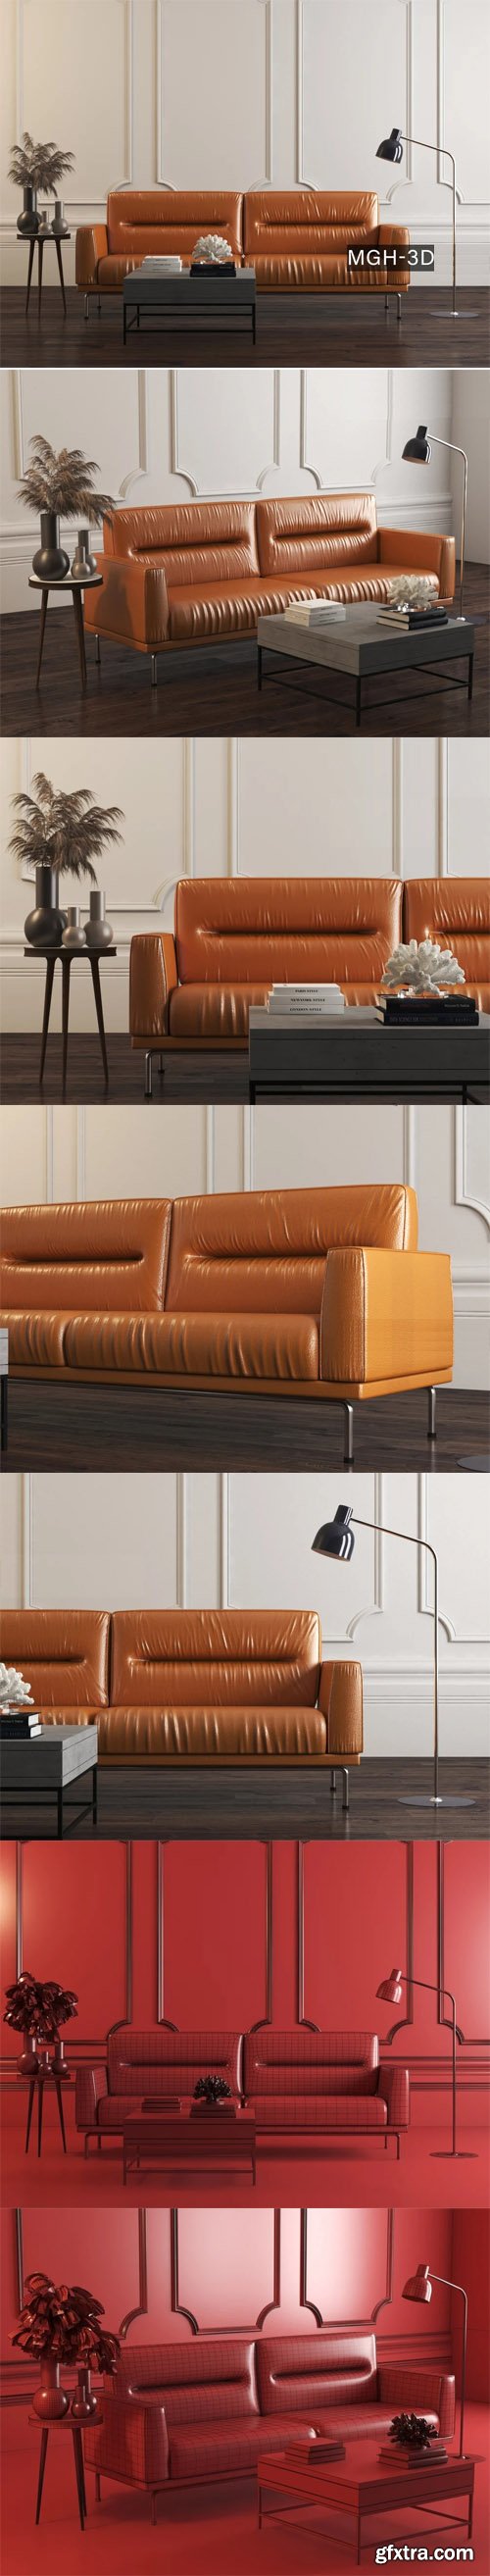 Leather Sofa Scene - 3d Model